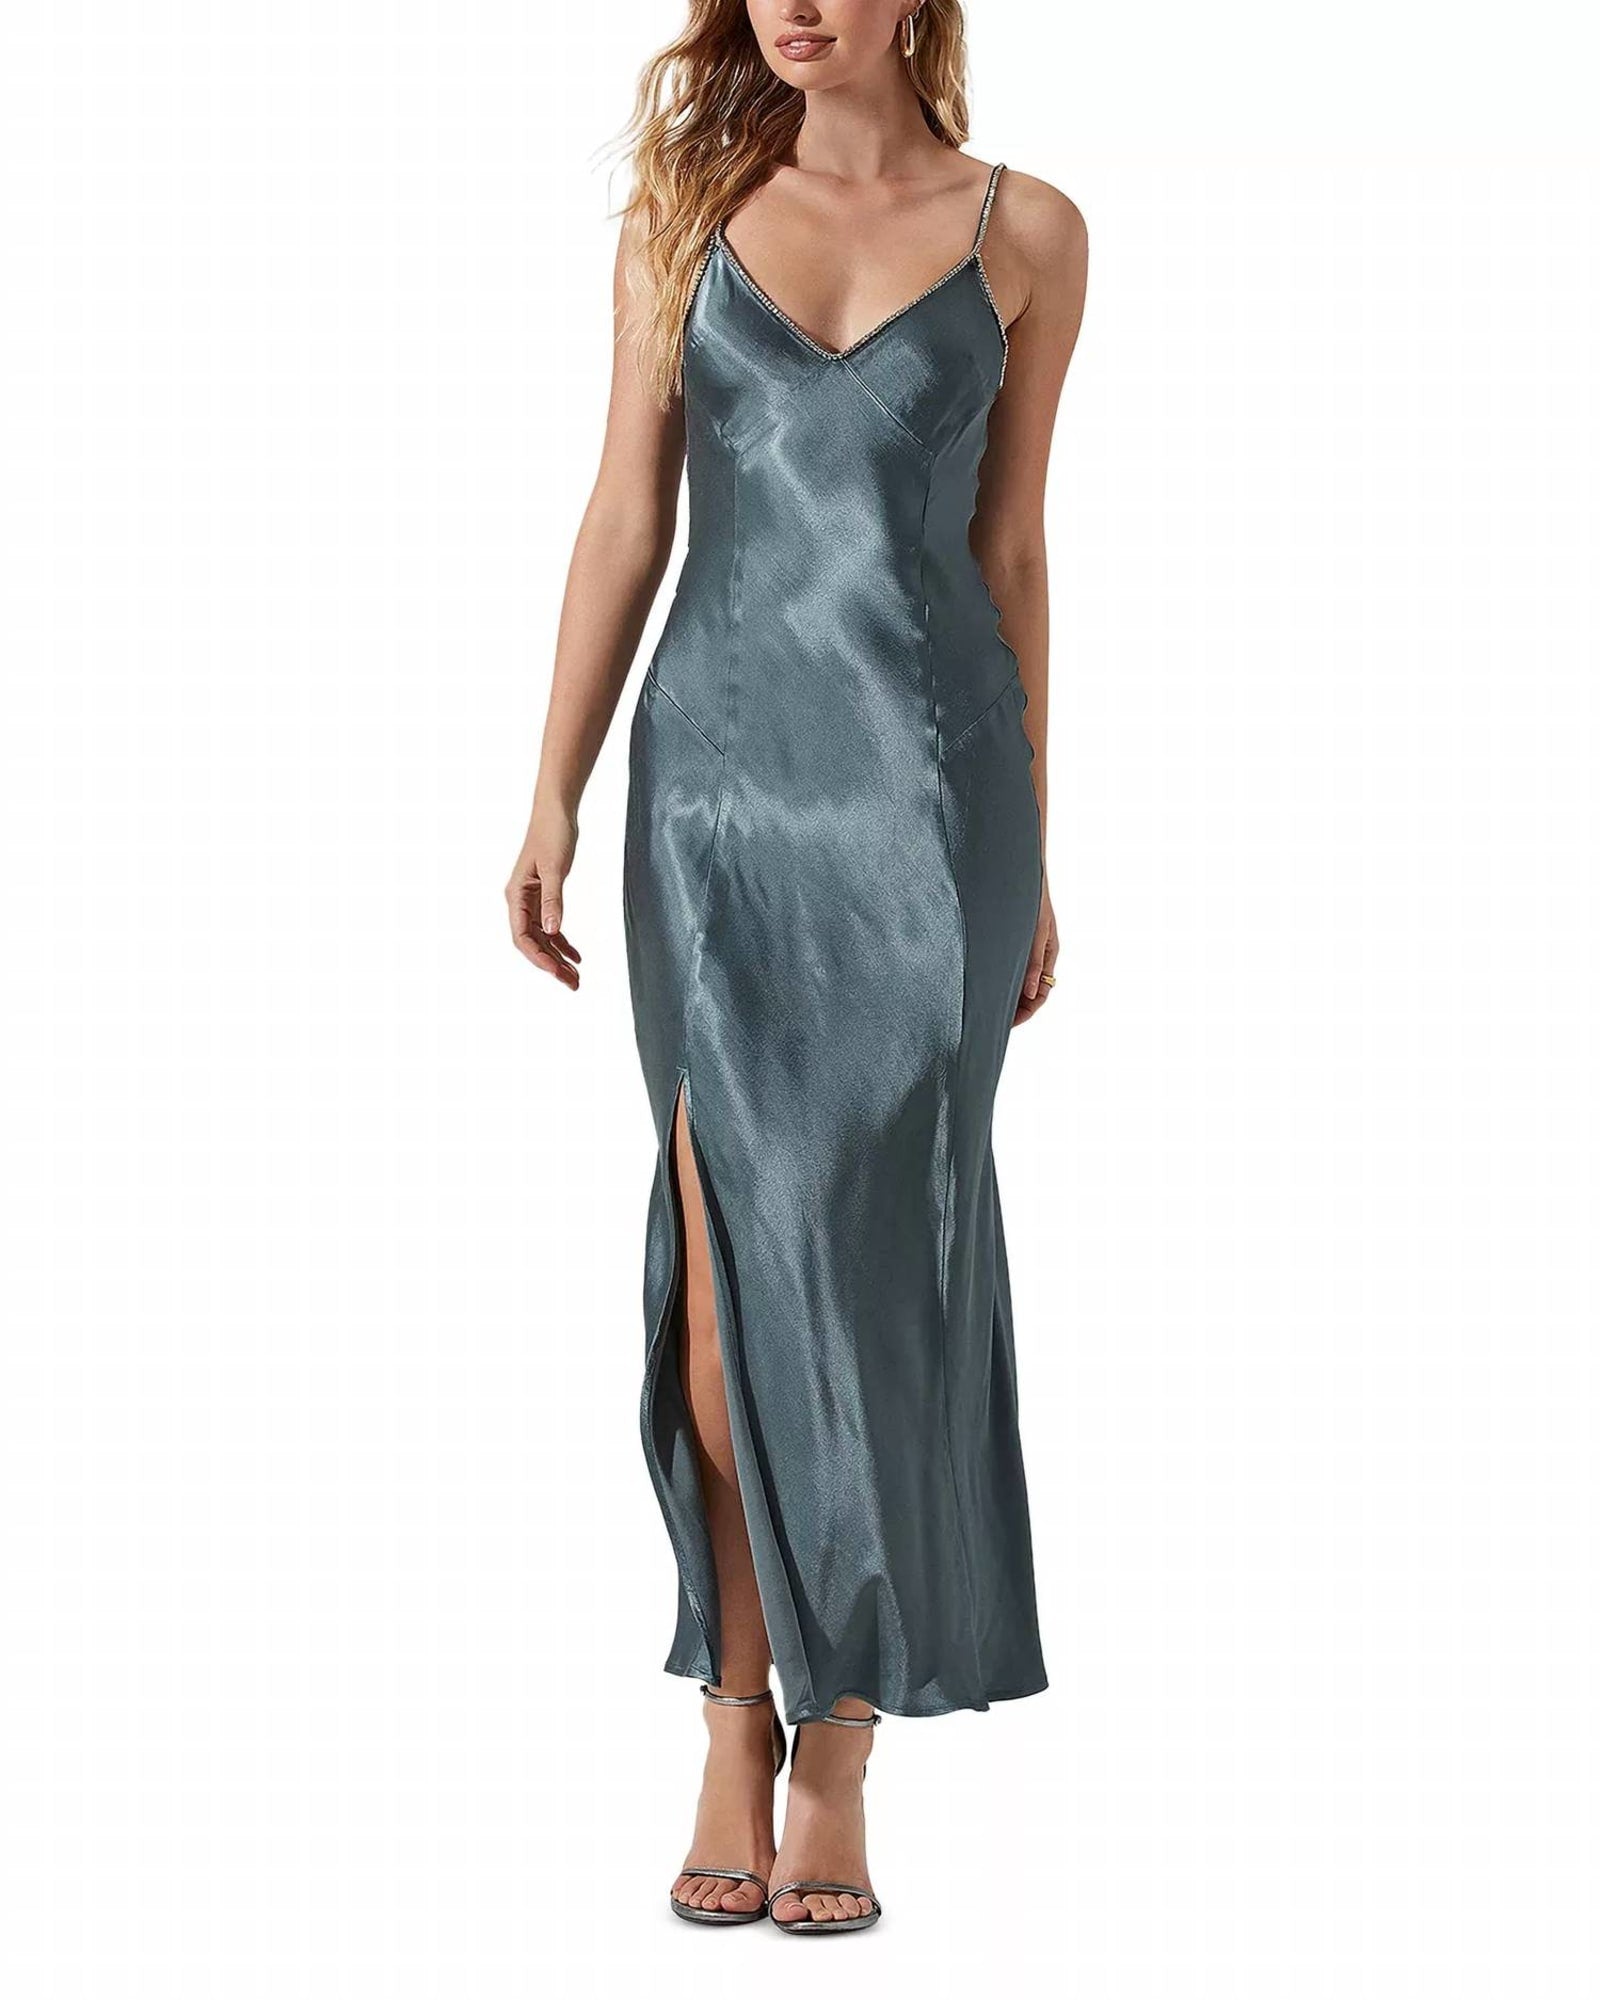 Chic Slate Blue Dress - Satin Slip Dress - Sleeveless Mini Dress